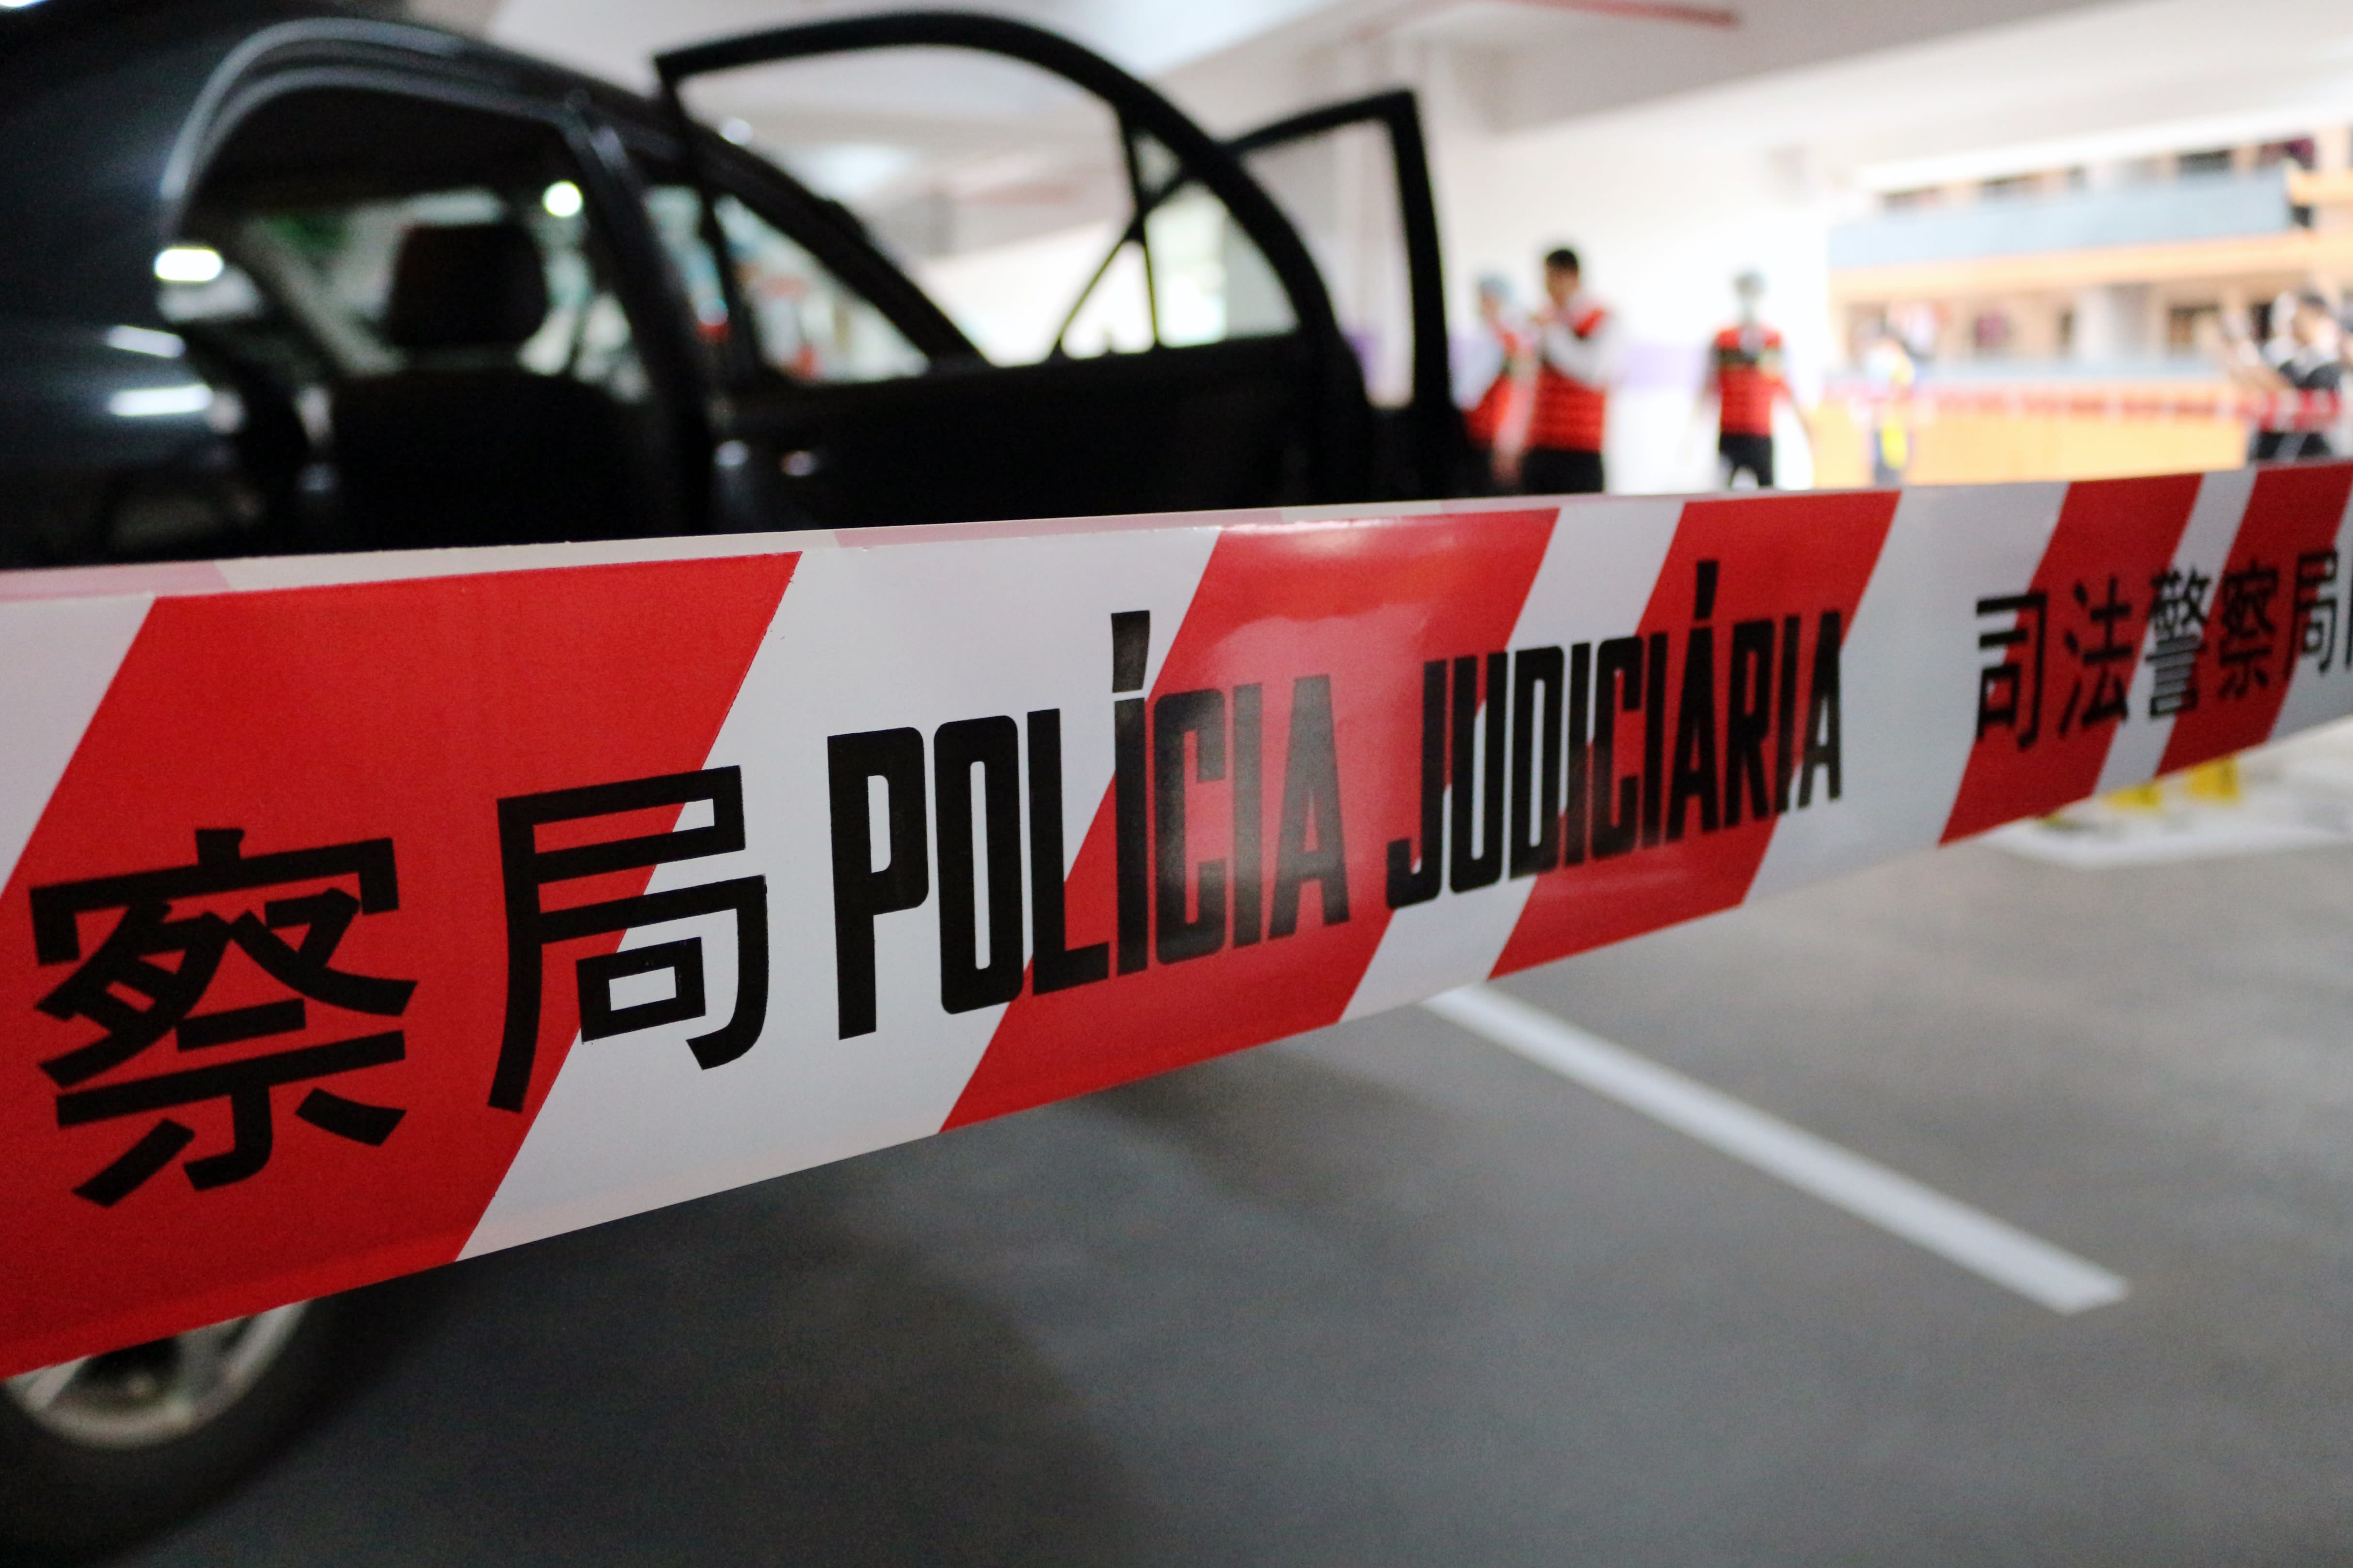 Crime Scene Investigation, Judiciary Police, Macau, China